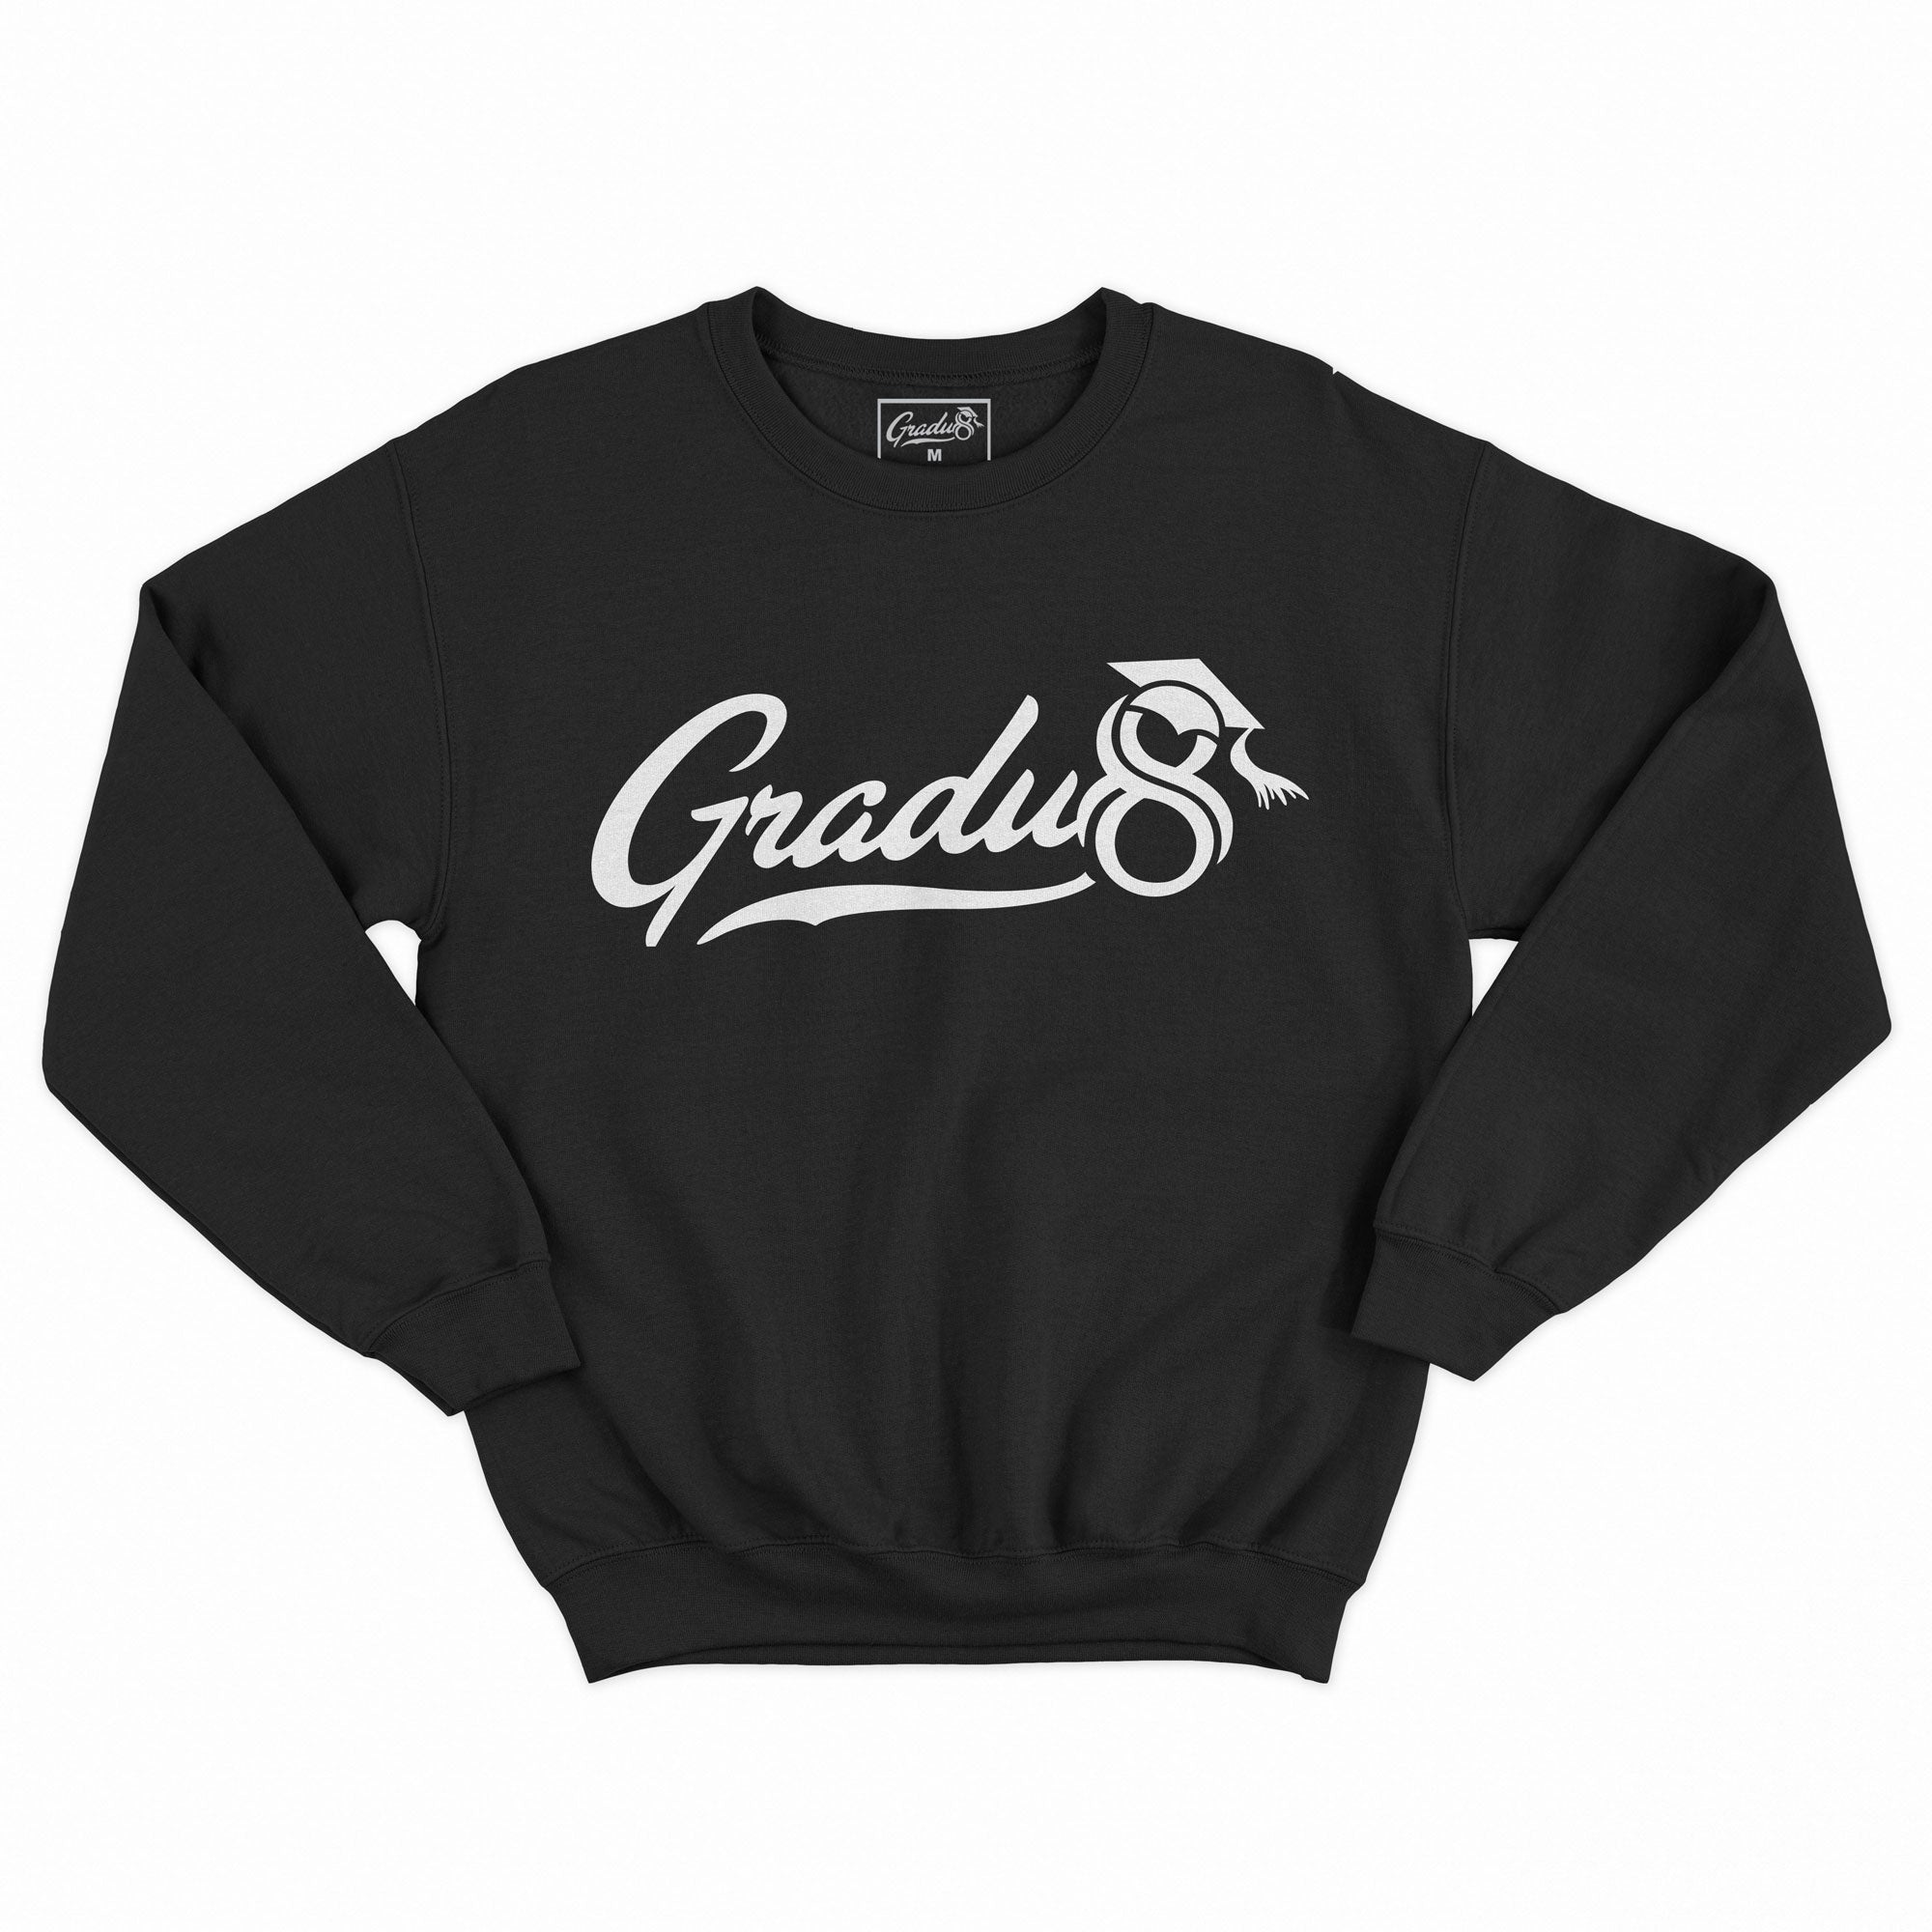 Official Gradu8 Premium Sweatshirt - Black